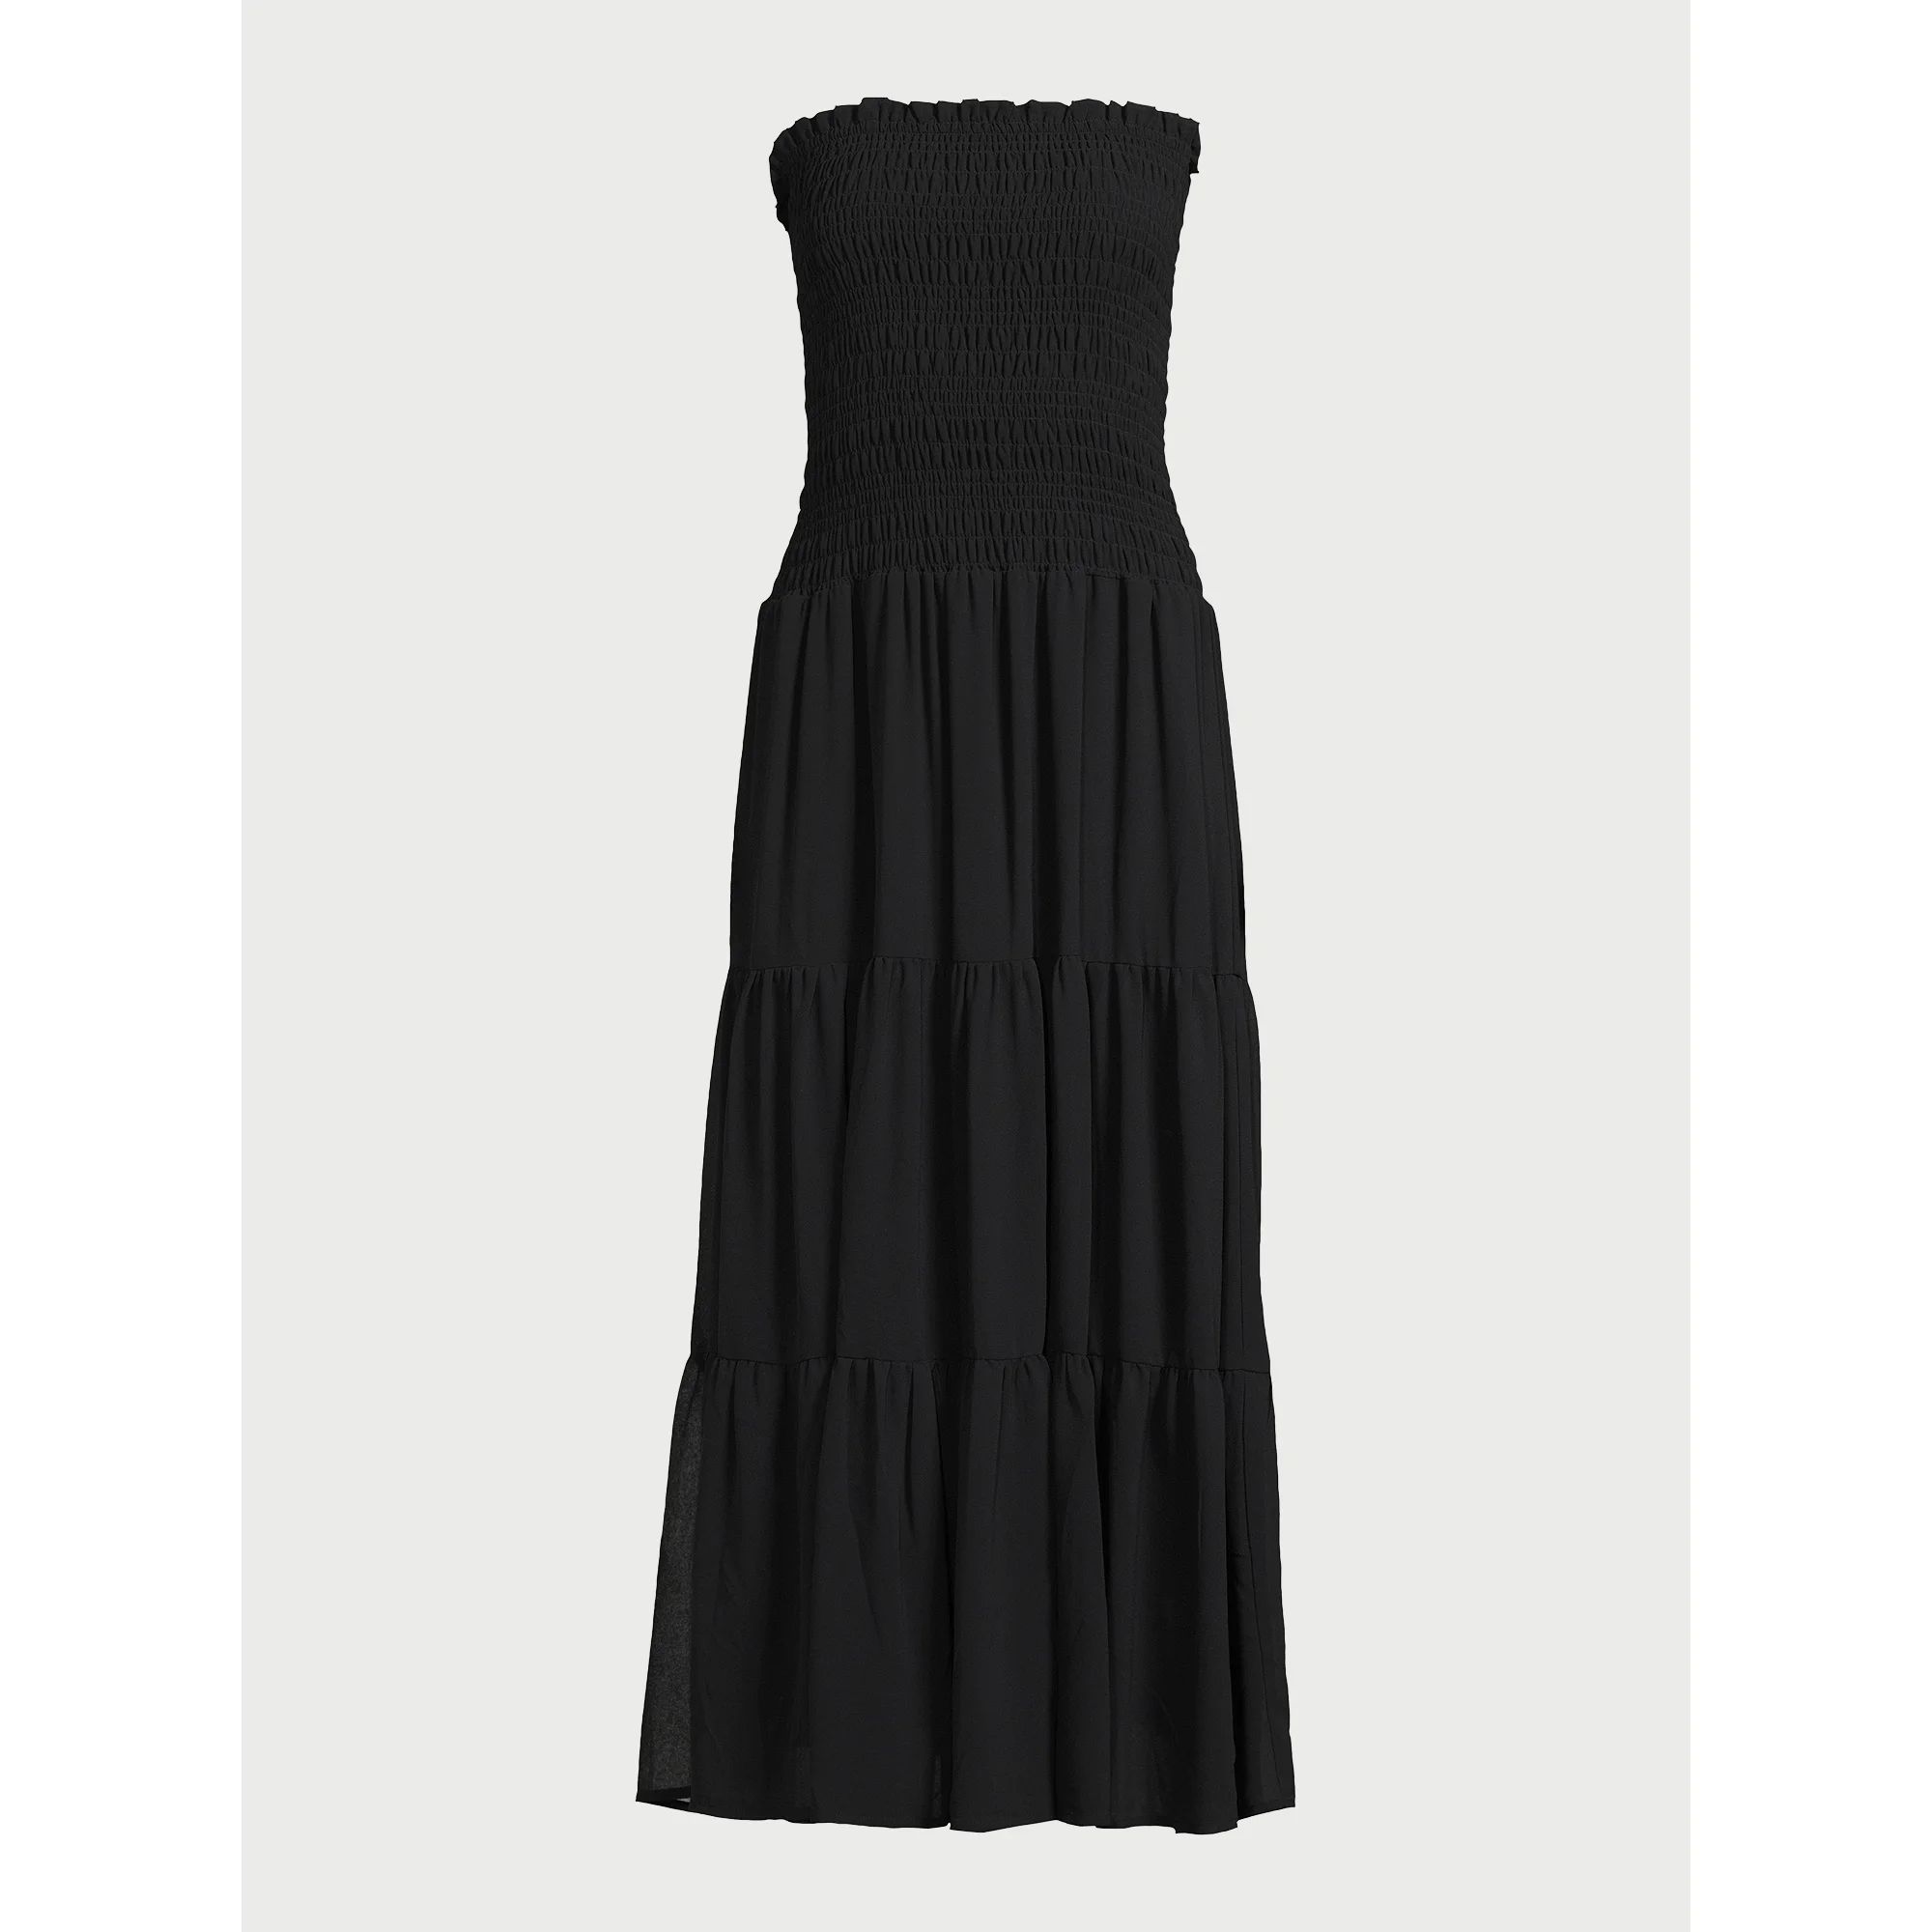 Scoop Women's Smocked Strapless Maxi Dress, Sizes XS-XXL | Walmart (US)